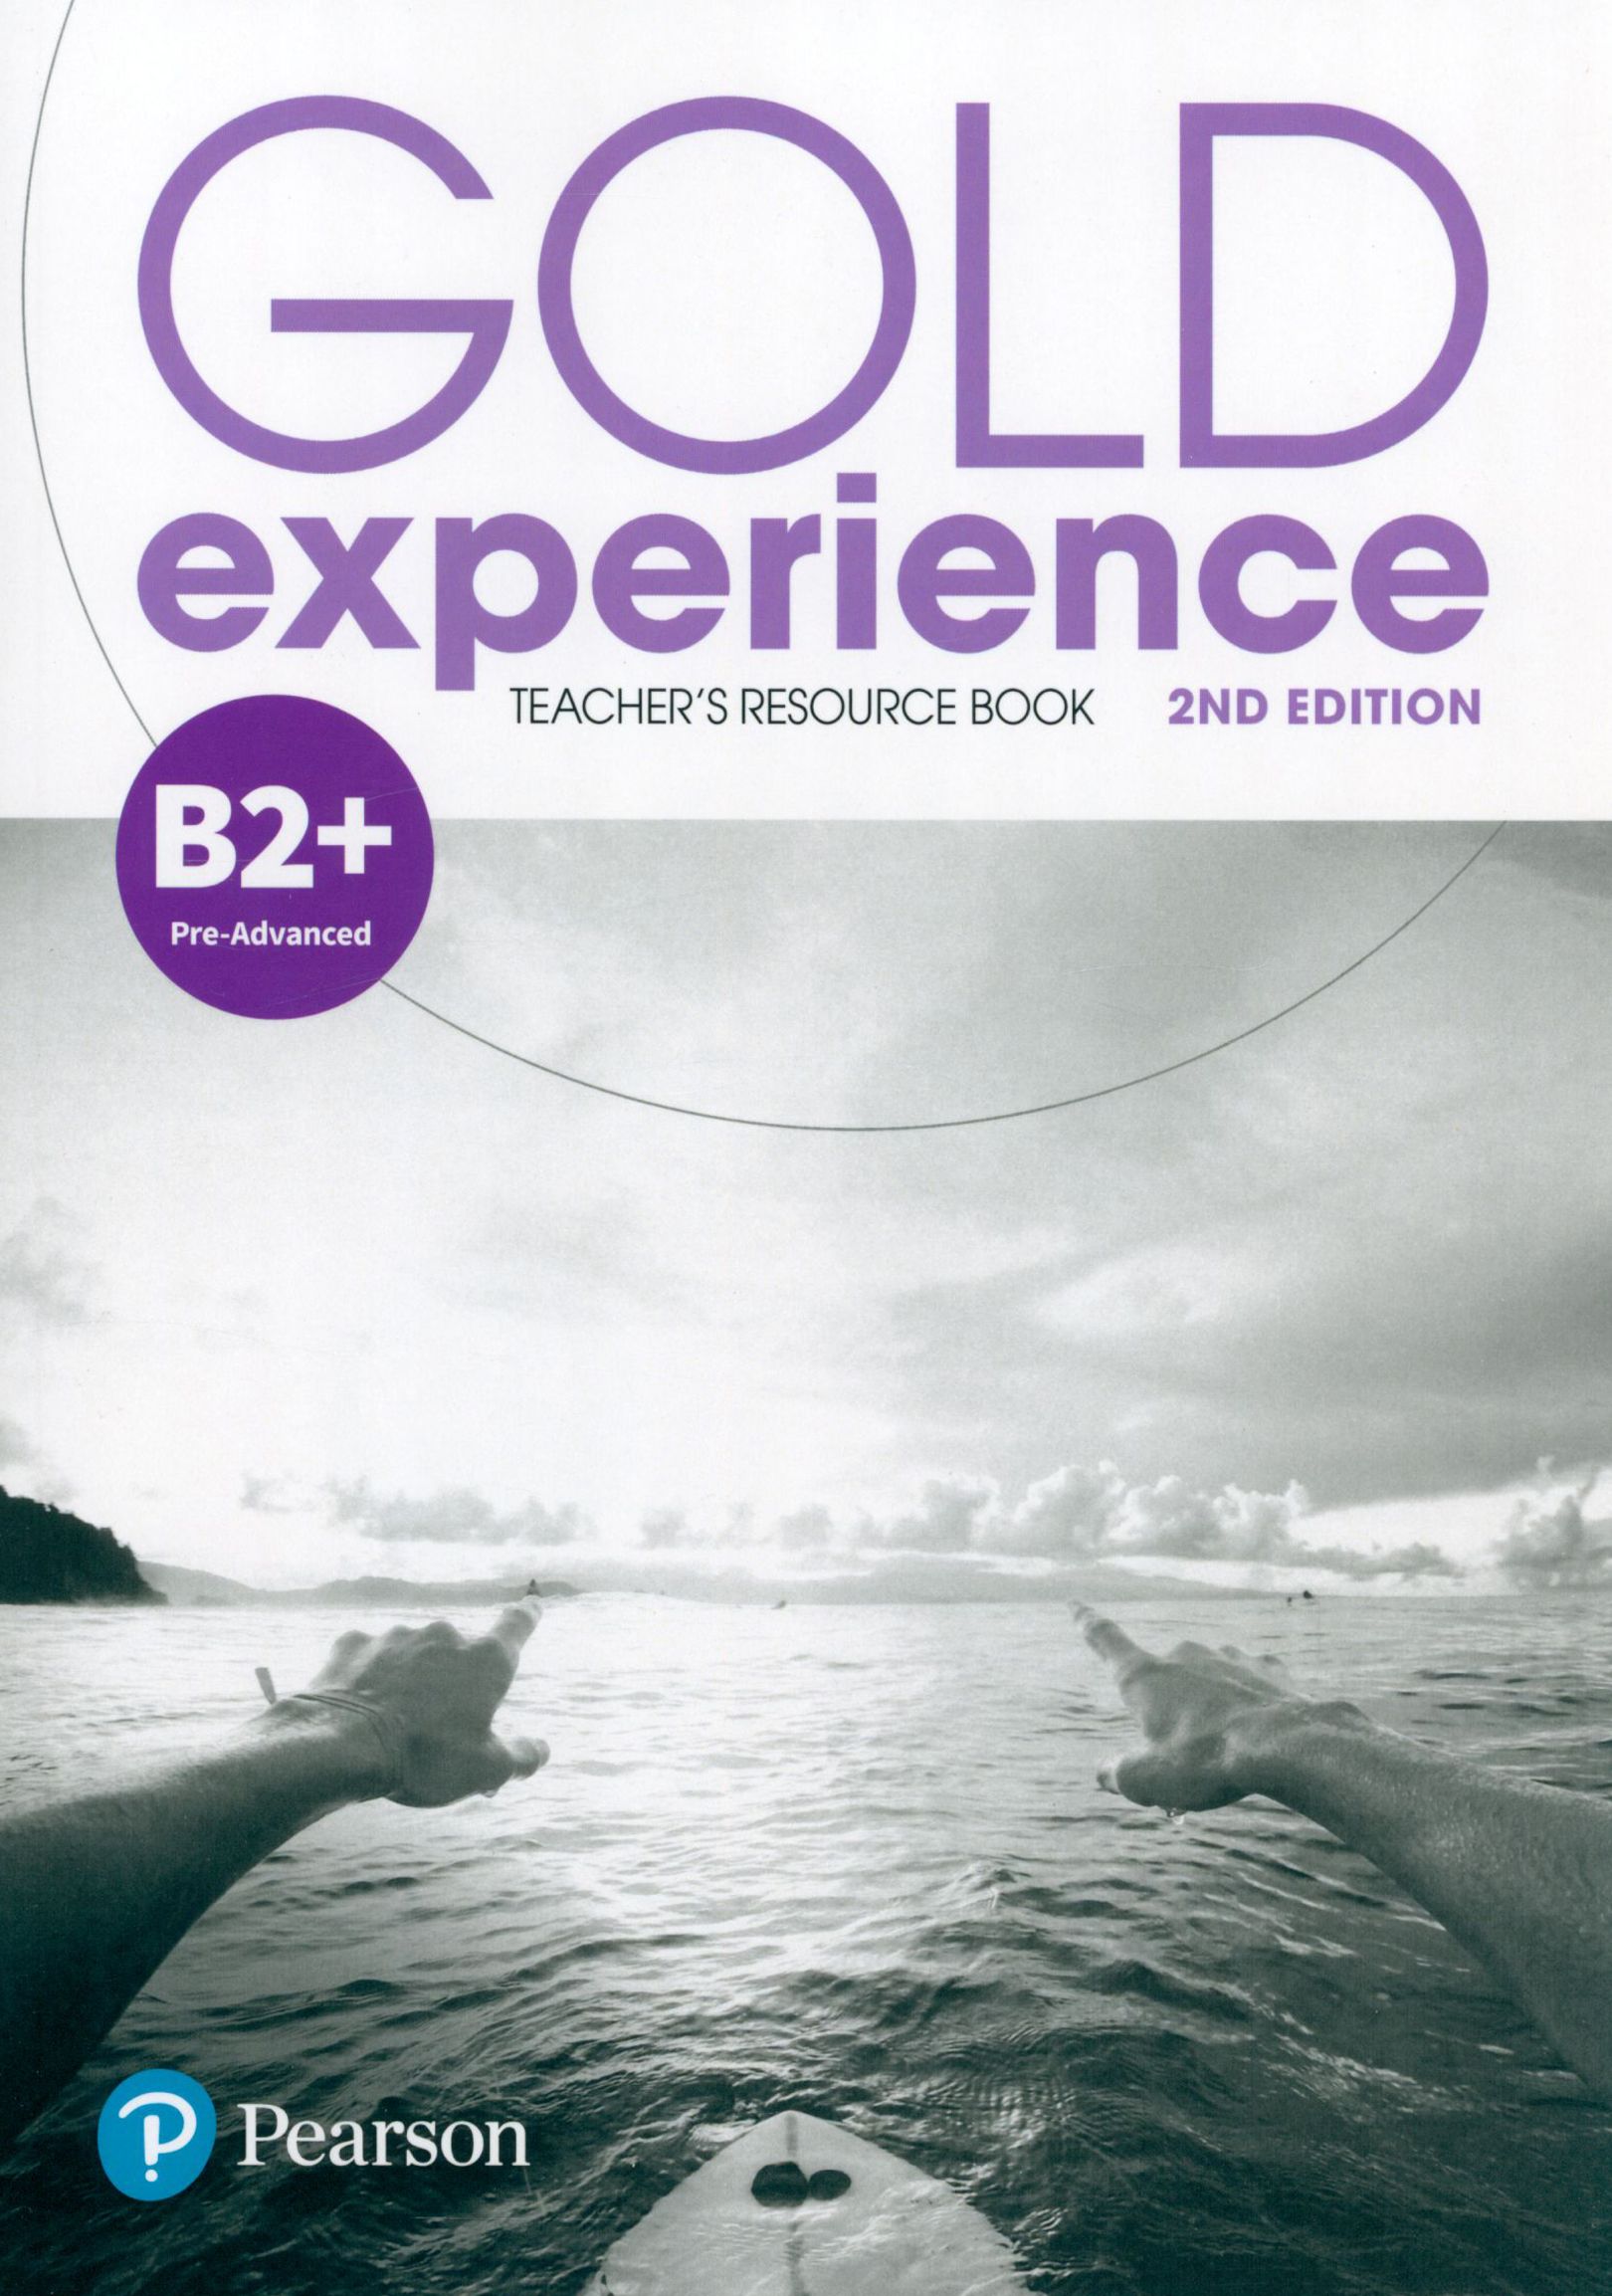 Gold experience b2 teacher's book 2 Edition.